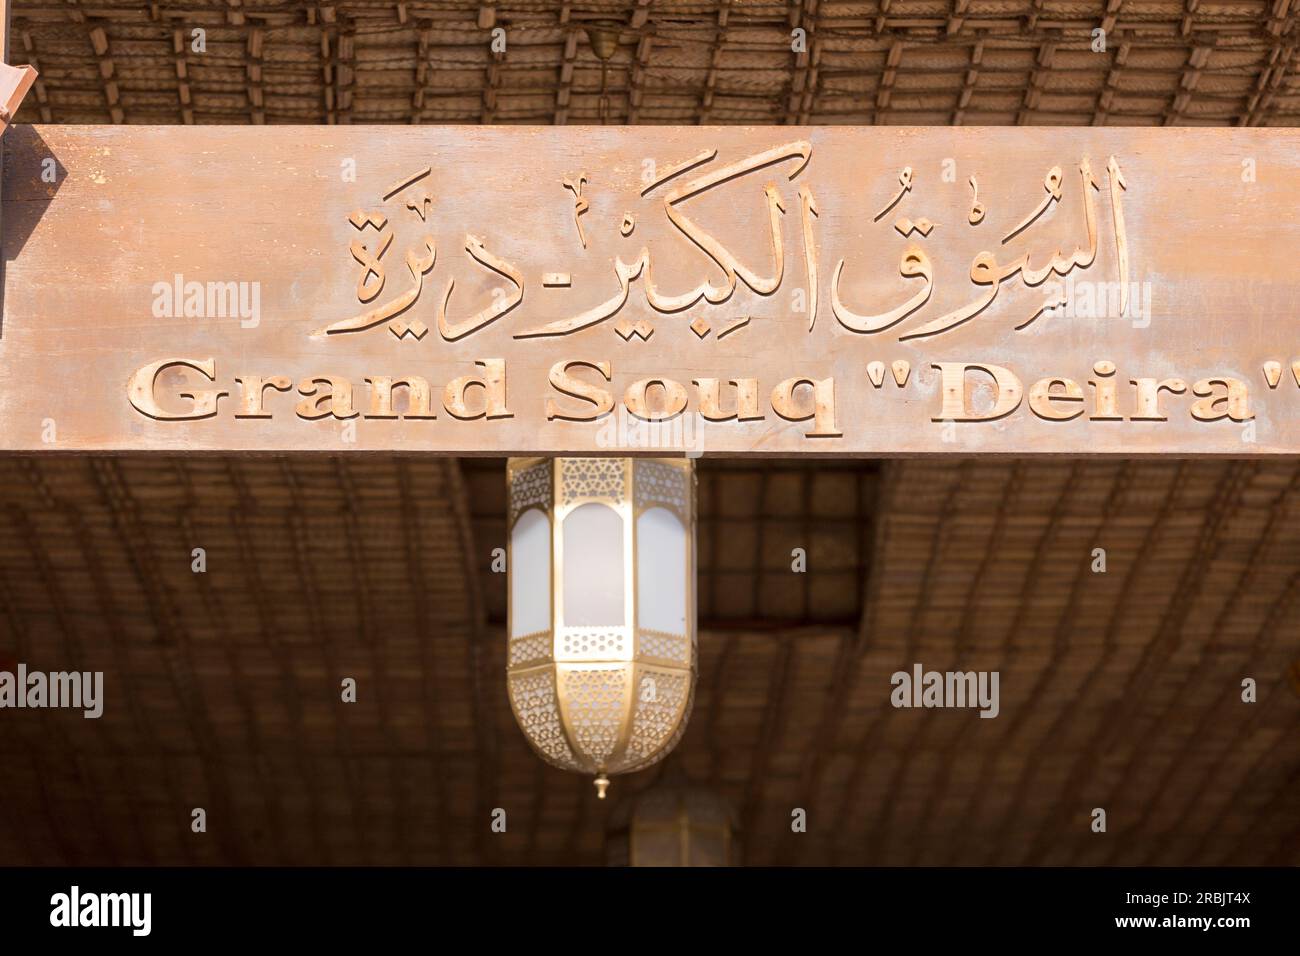 Emirati Arabi Uniti, Dubai, cartello d'ingresso al Grand Souq "Deira". Foto Stock